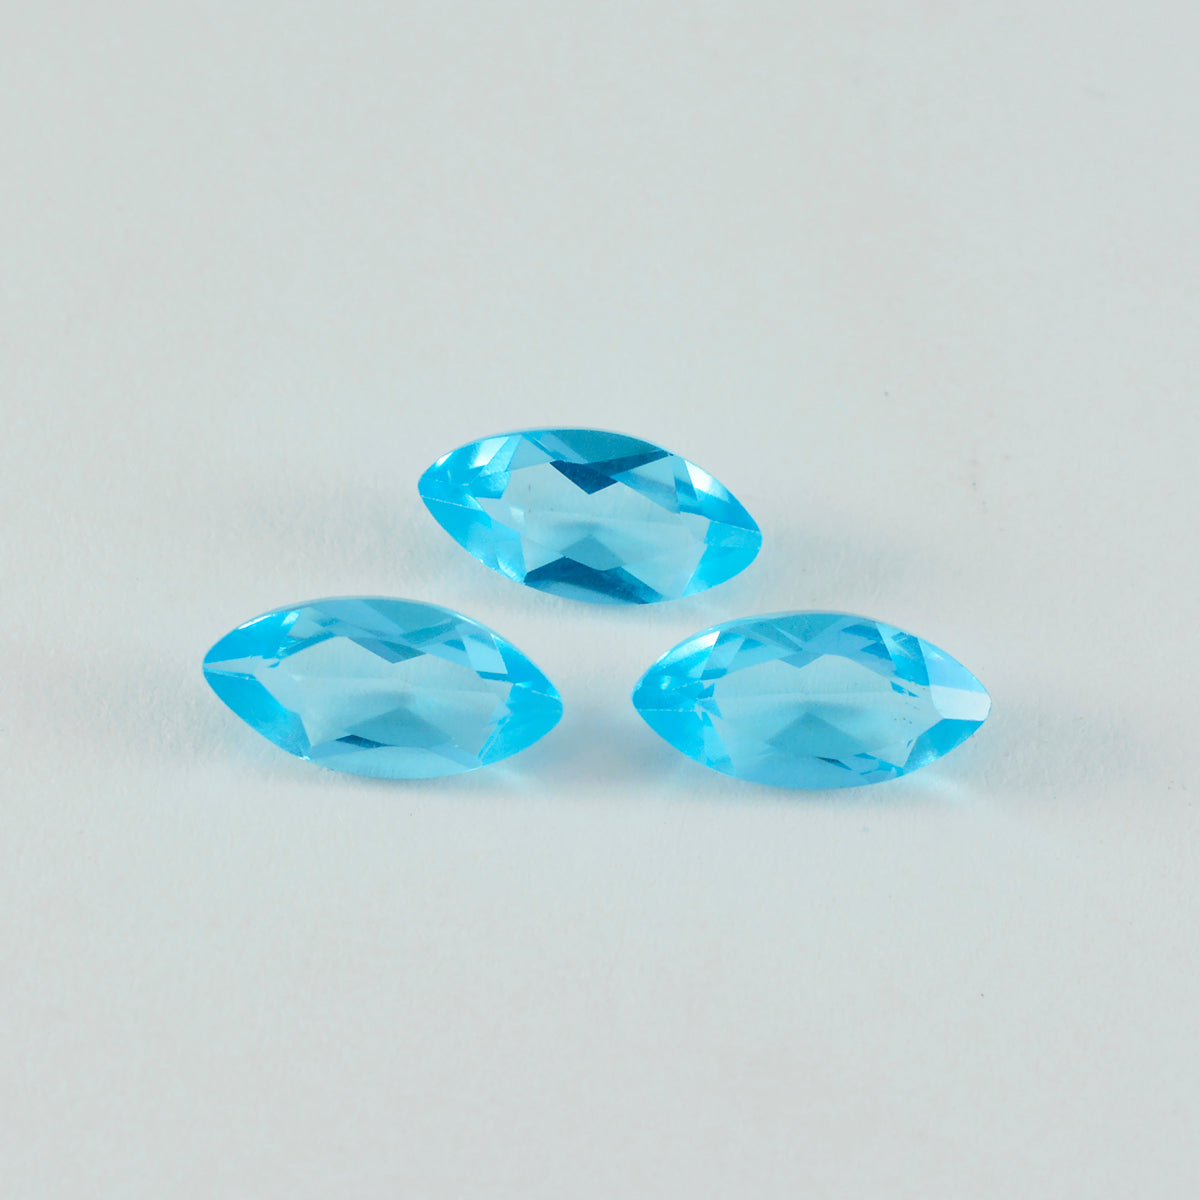 Riyogems 1PC Blue Topaz CZ Faceted 10x20 mm Marquise Shape A+ Quality Loose Stone